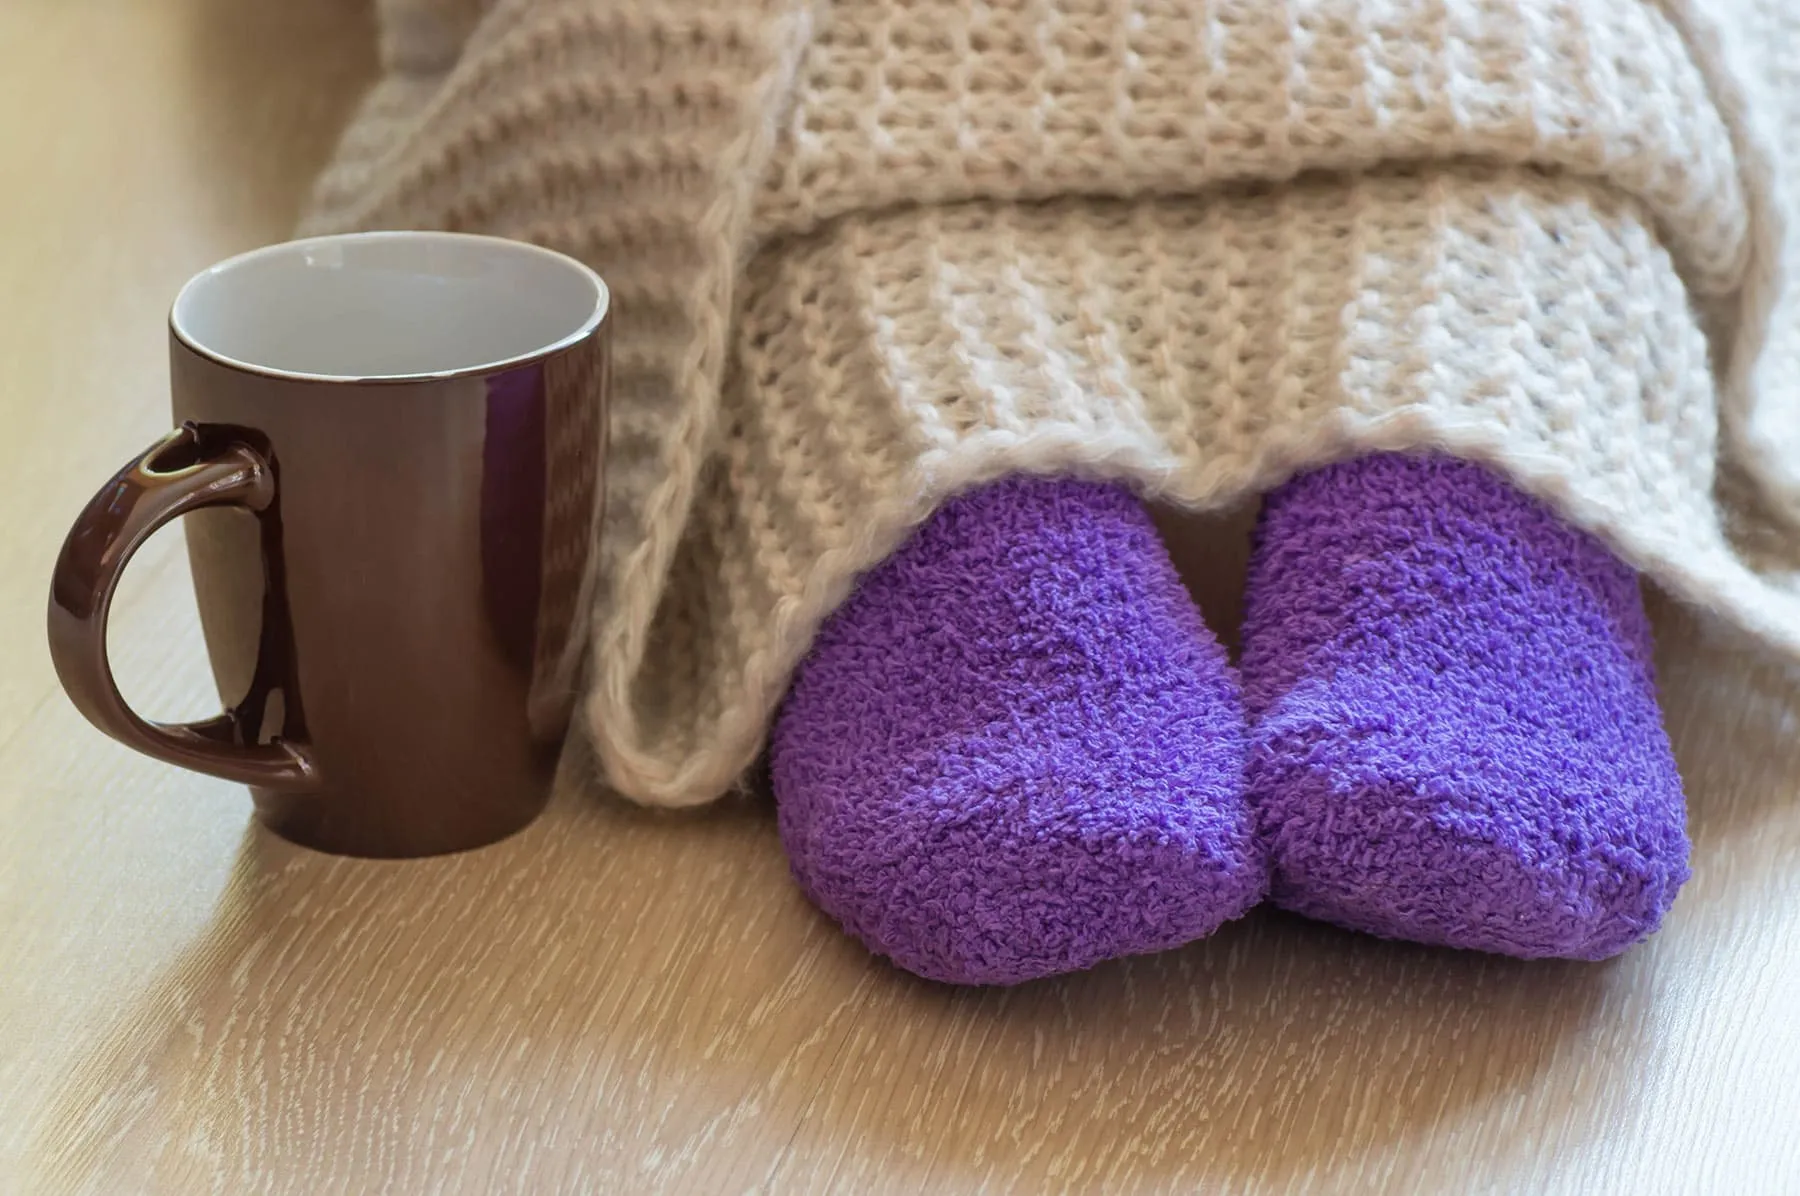 socks blanket and cup of tea